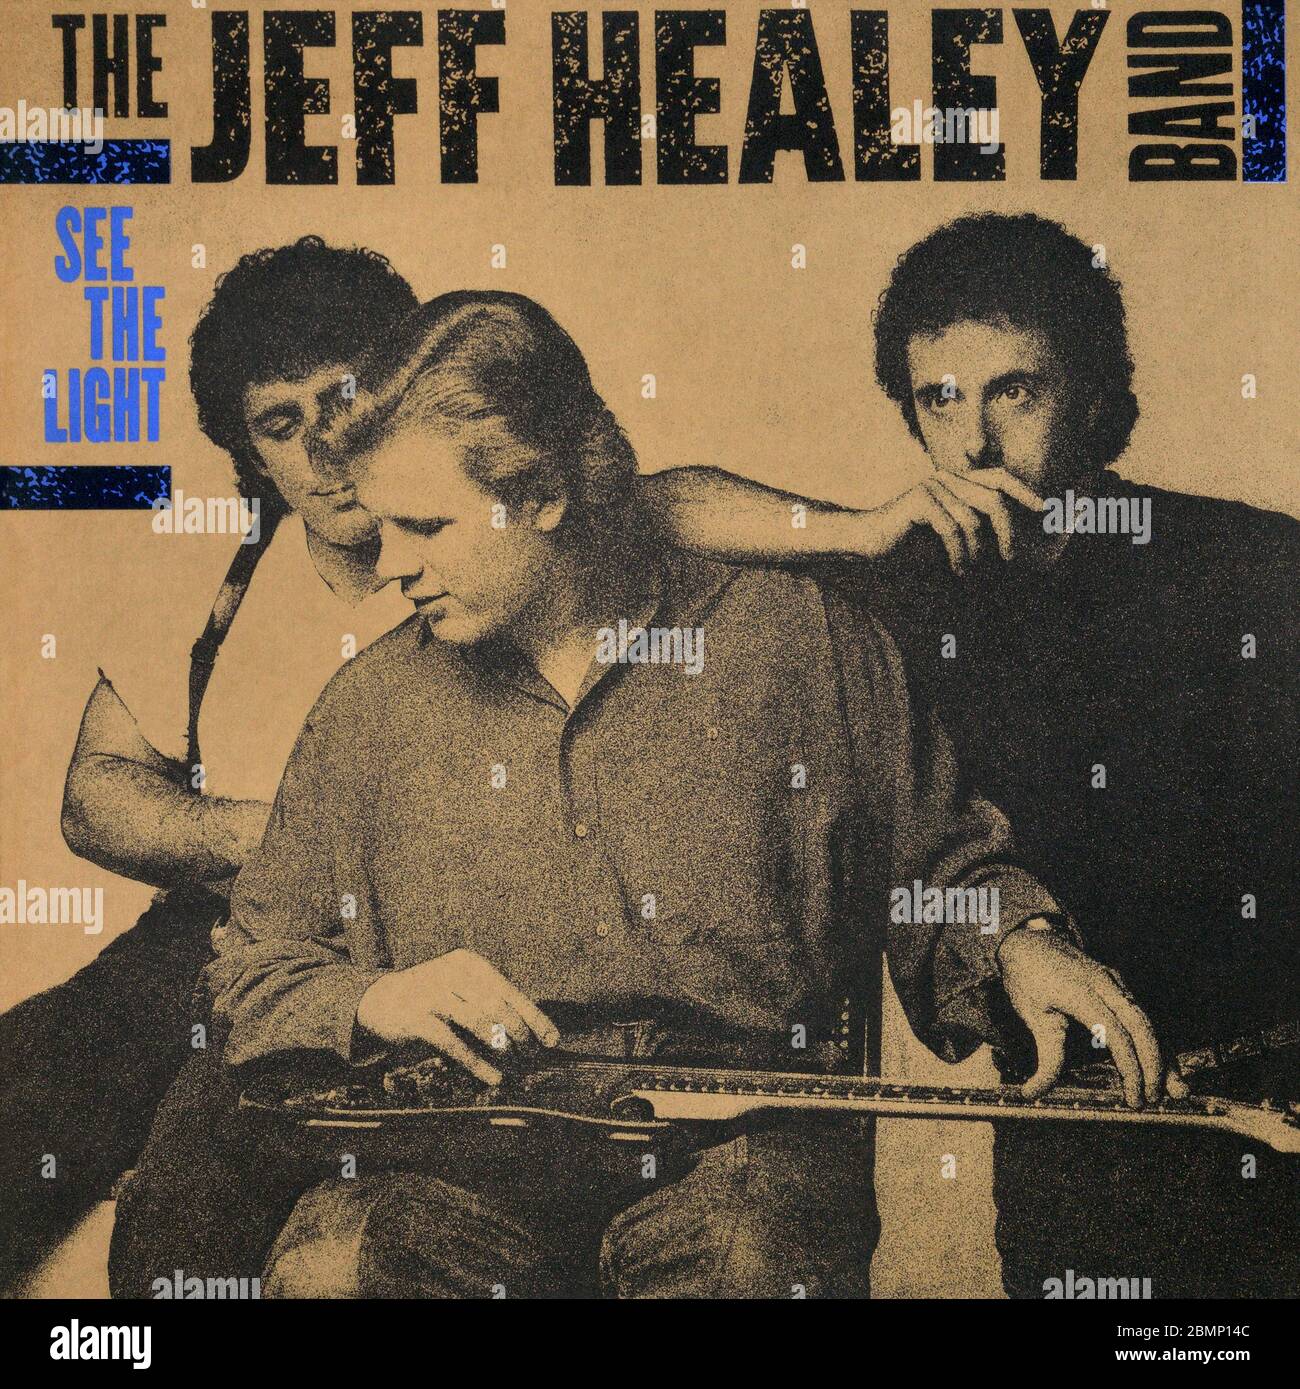 The Jeff Healey Band - original Vinyl Album Cover - See The Light - 1988 Stockfoto